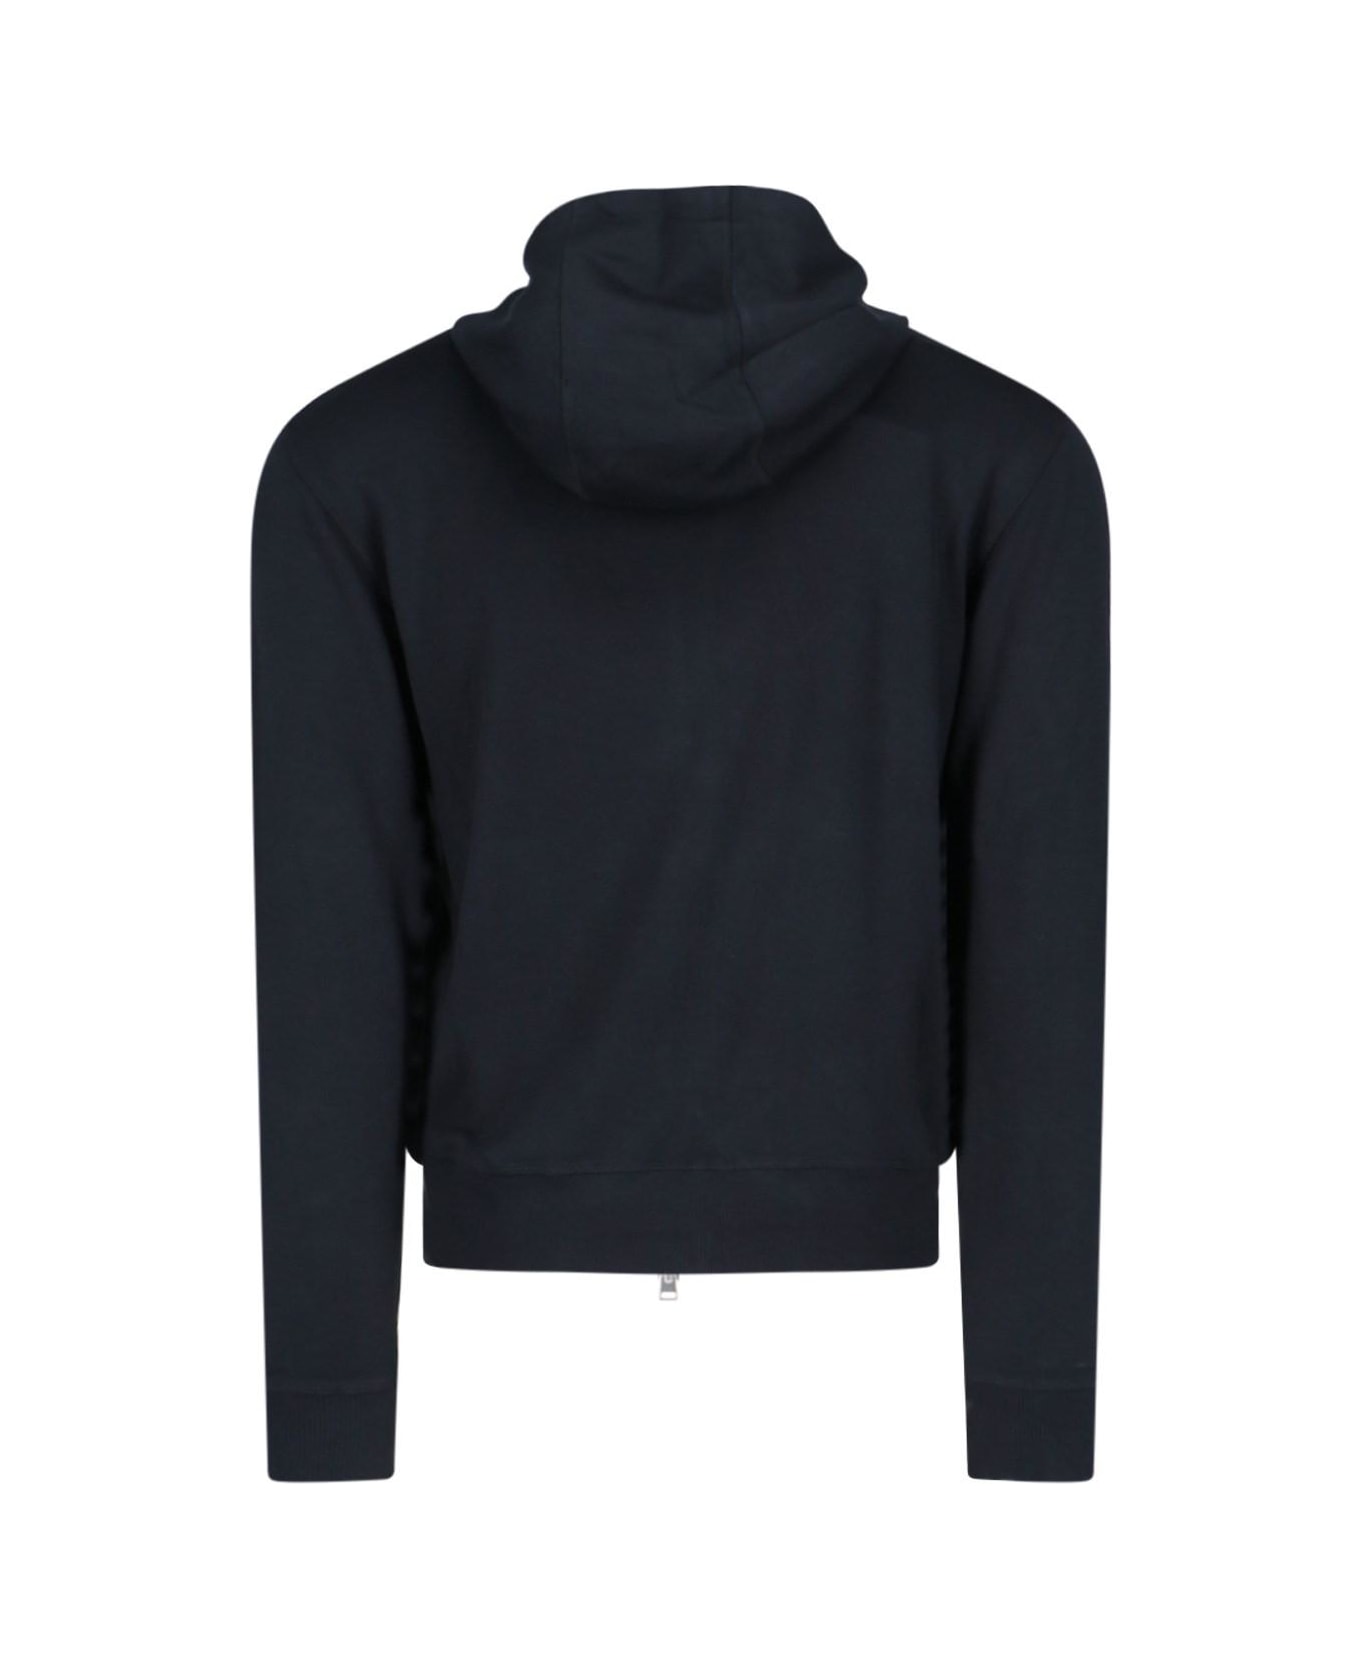 Tom Ford Basic Zip Sweatshirt - BLACK